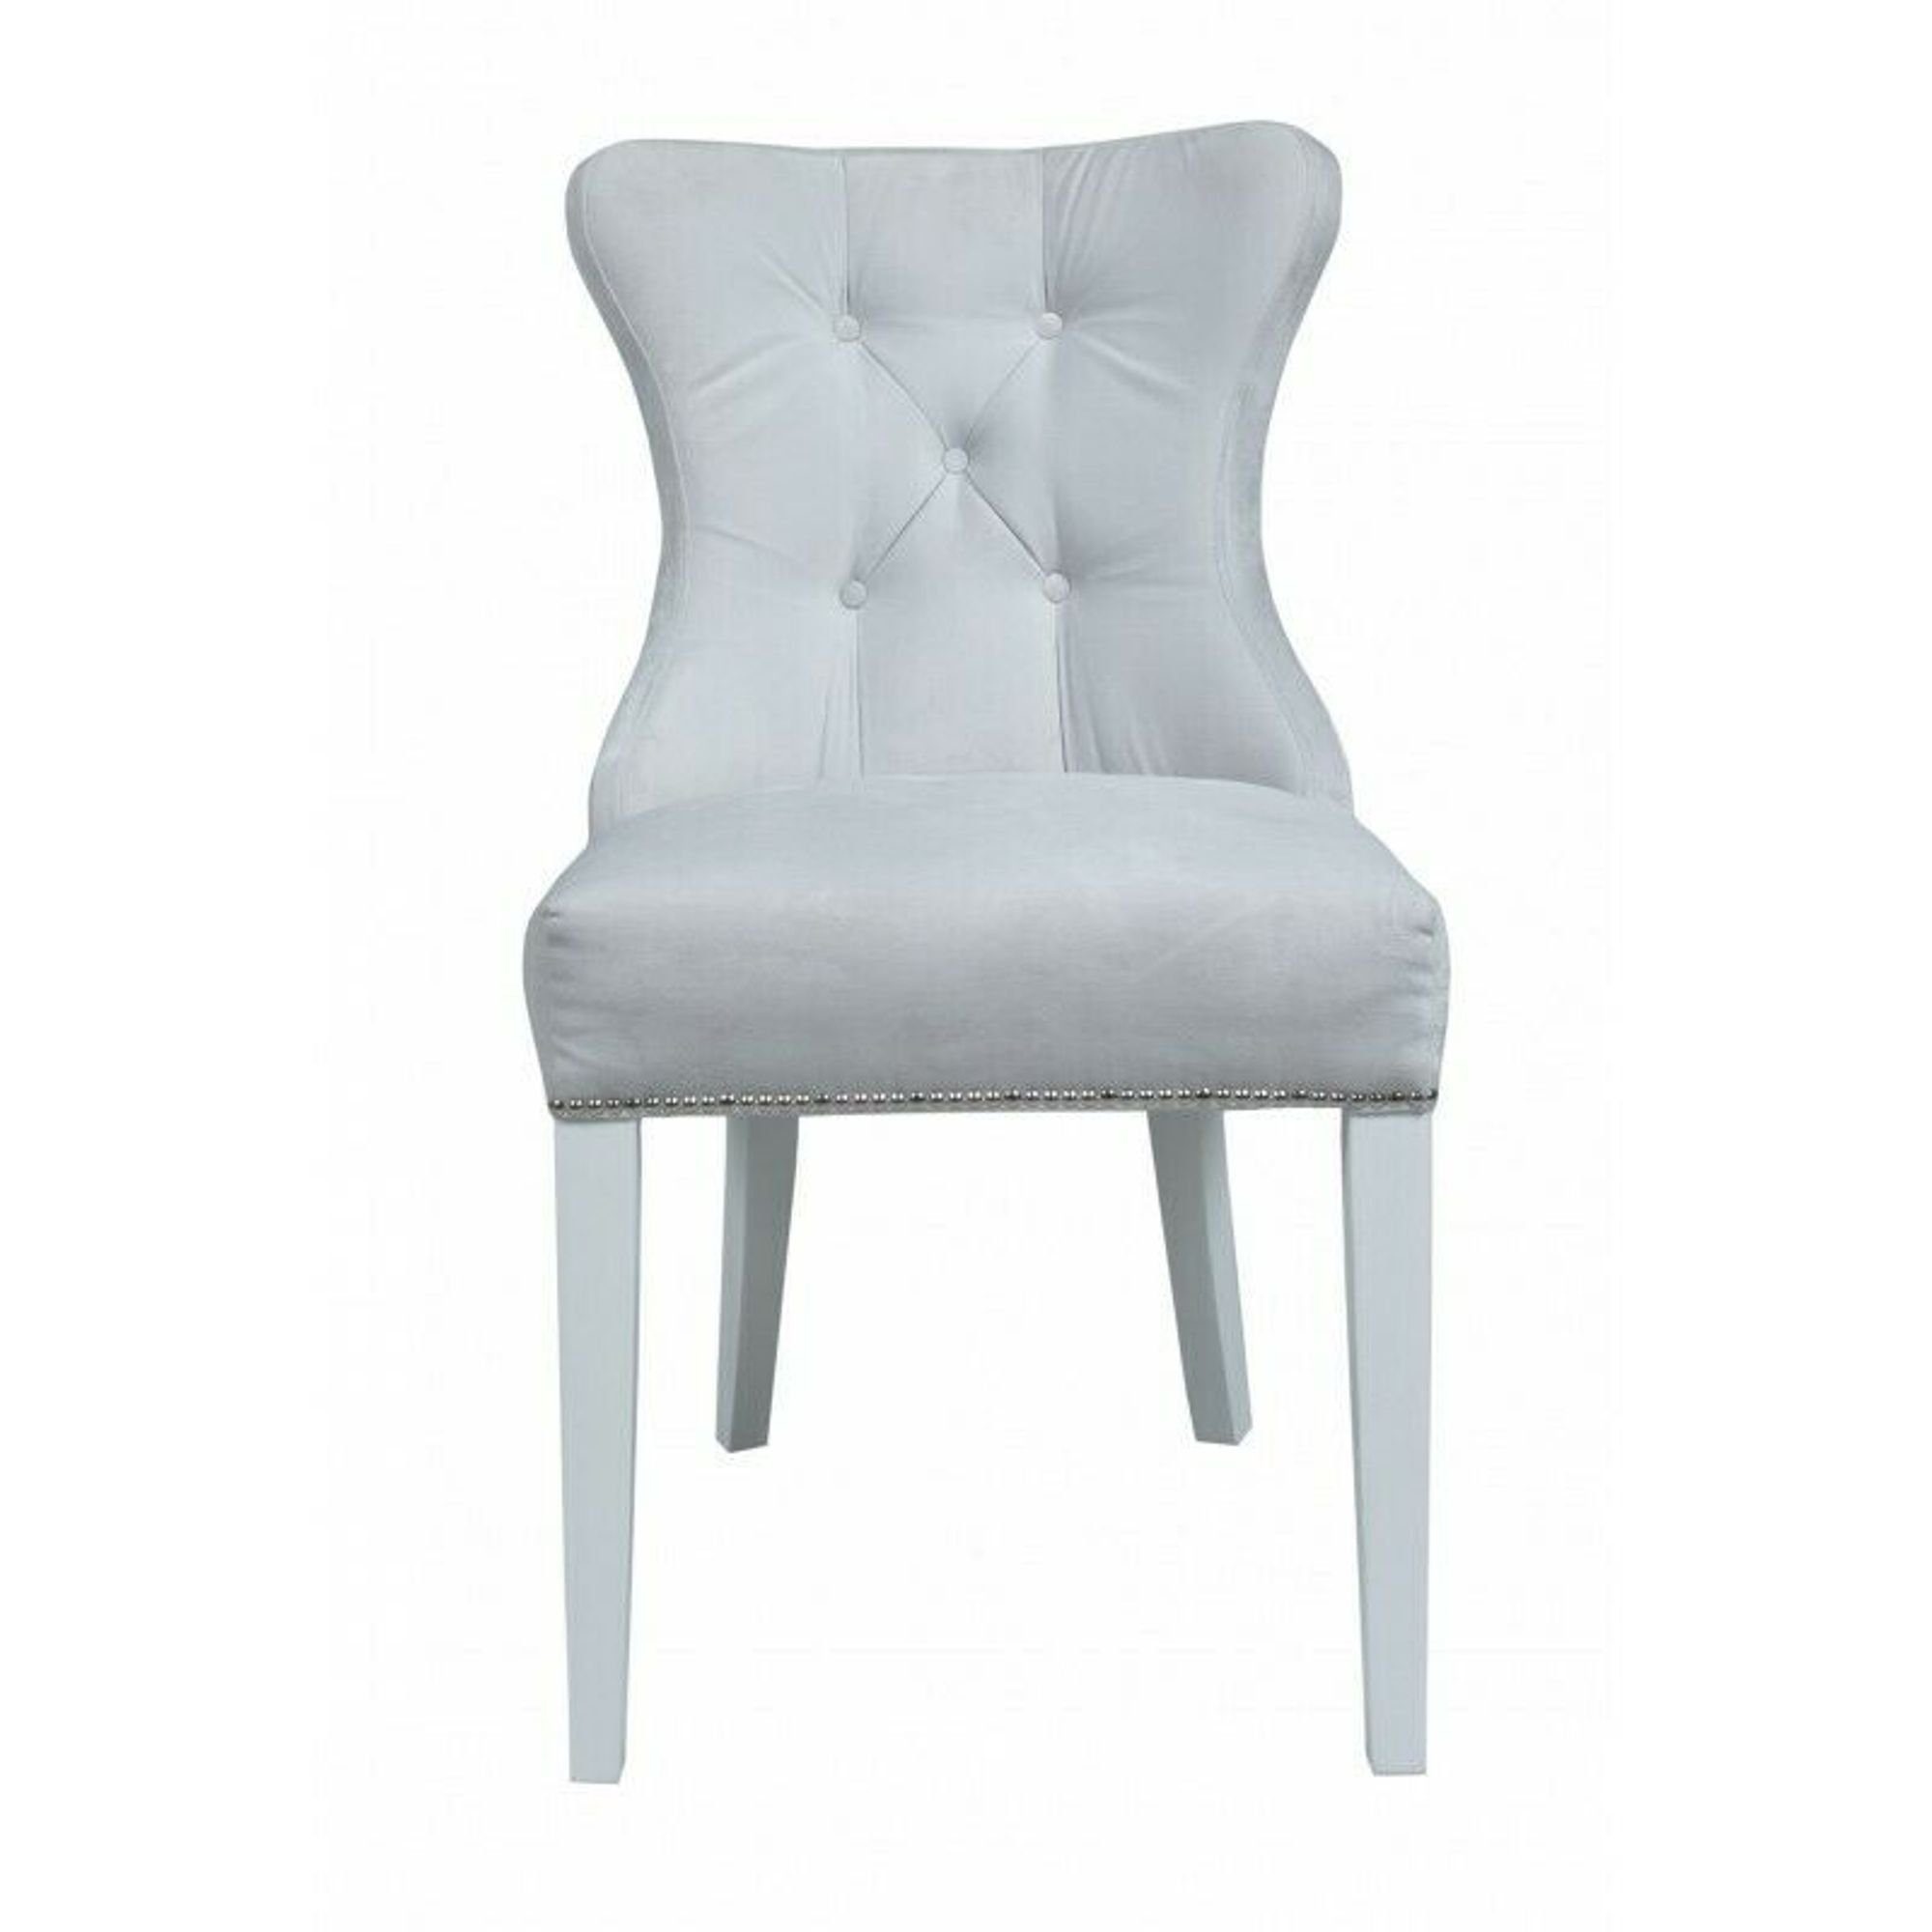 Textil 10x Stühle Gruppe Stuhl, Polster Set Garnitur Stuhl Chesterfield Design JVmoebel Hotel